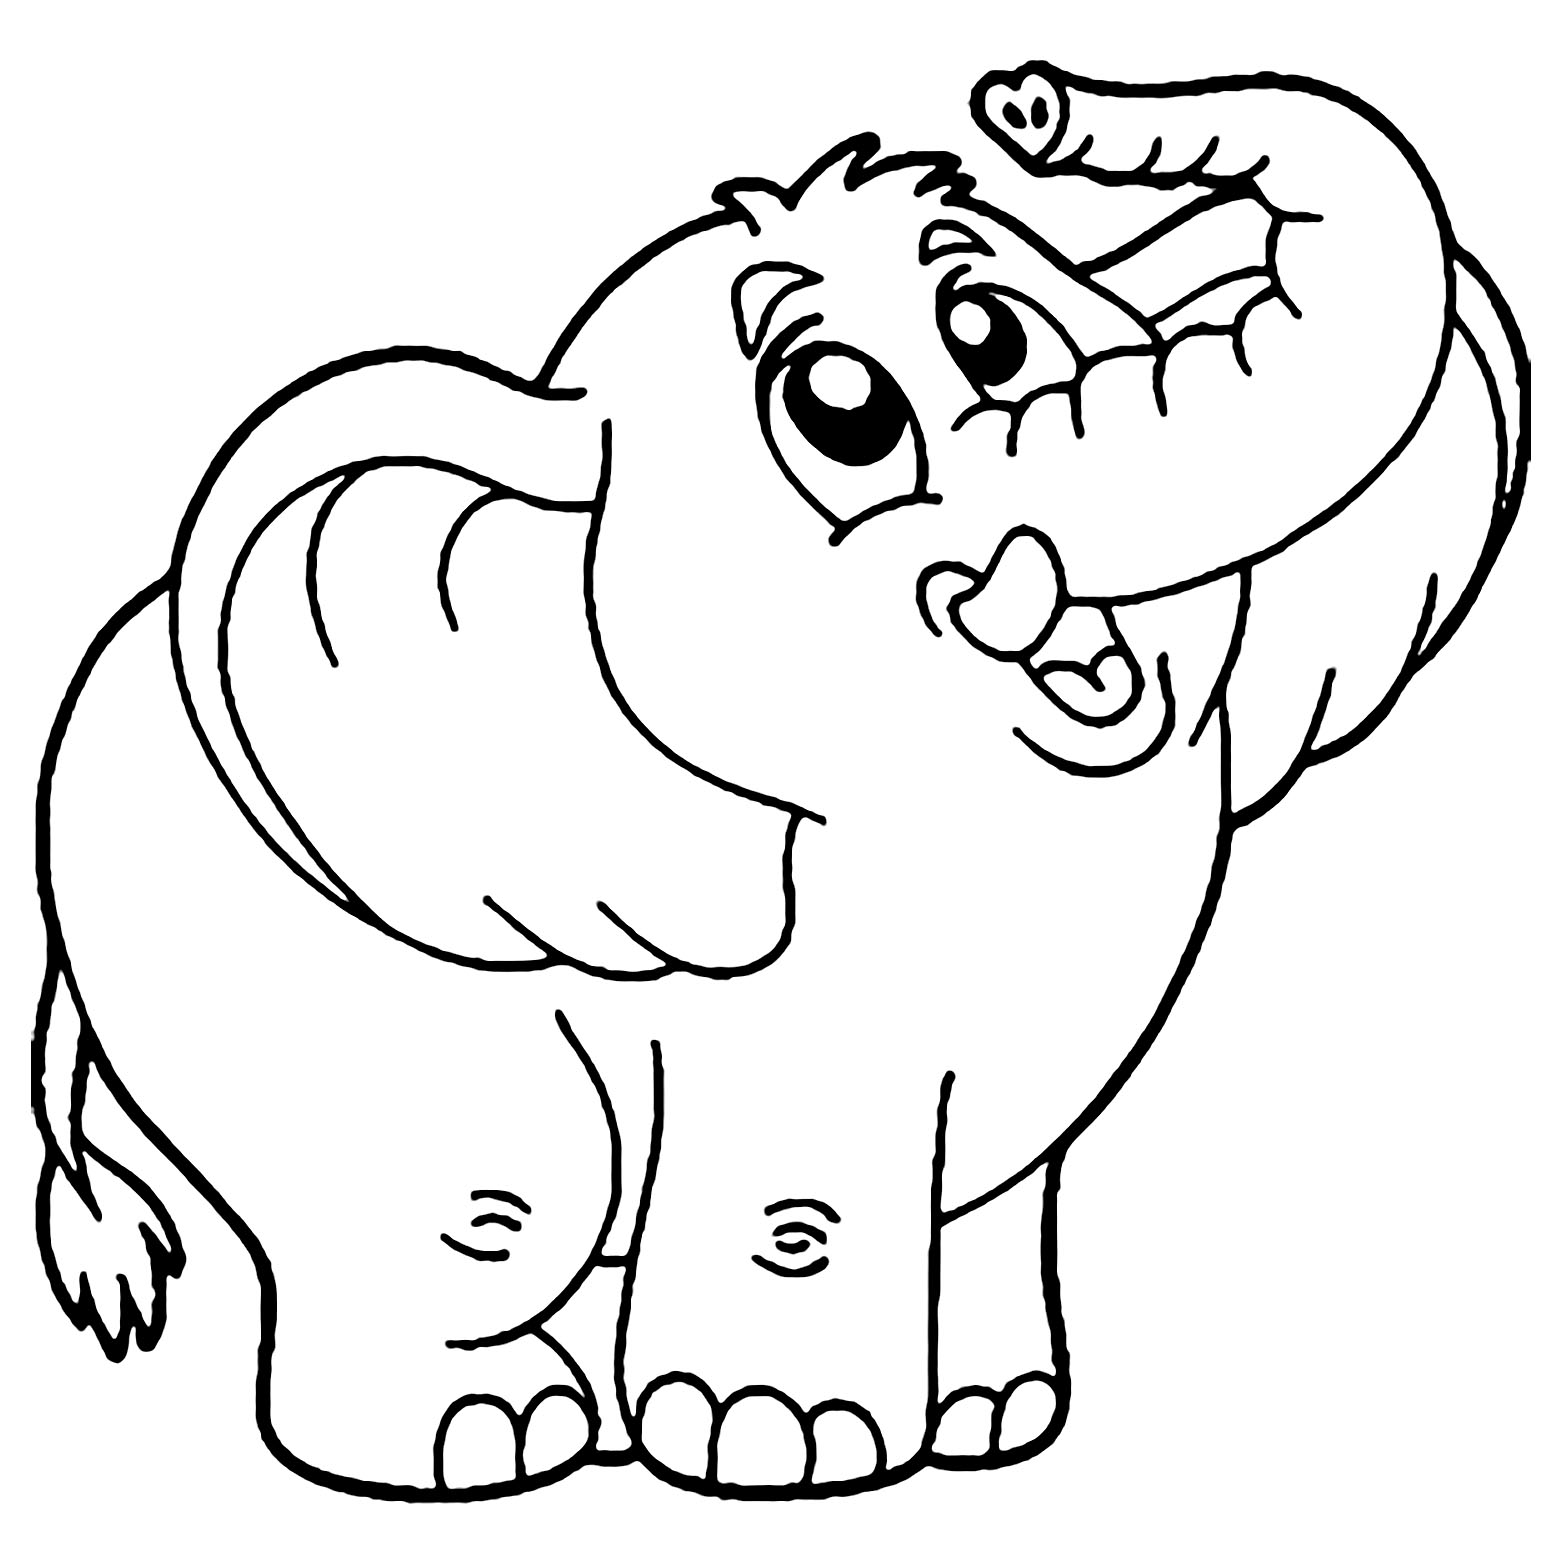 Dibujos para colorear de Elefantes para imprimir